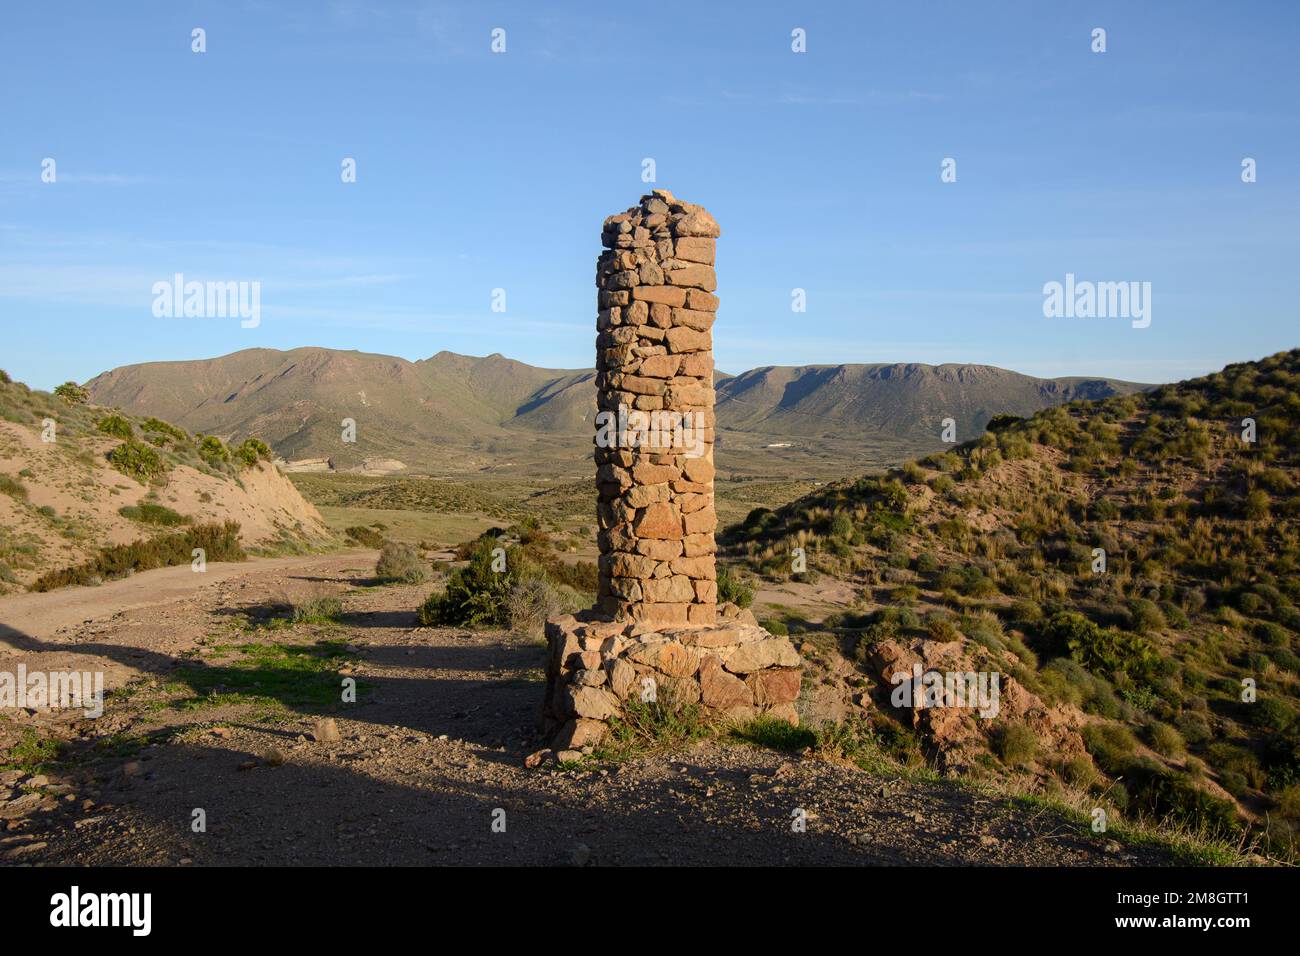 Obelisk on Cabo de Gata coastal path south of La Isleta del Moro, Almeria province, Spain. View from near El Embacadero. Stock Photo